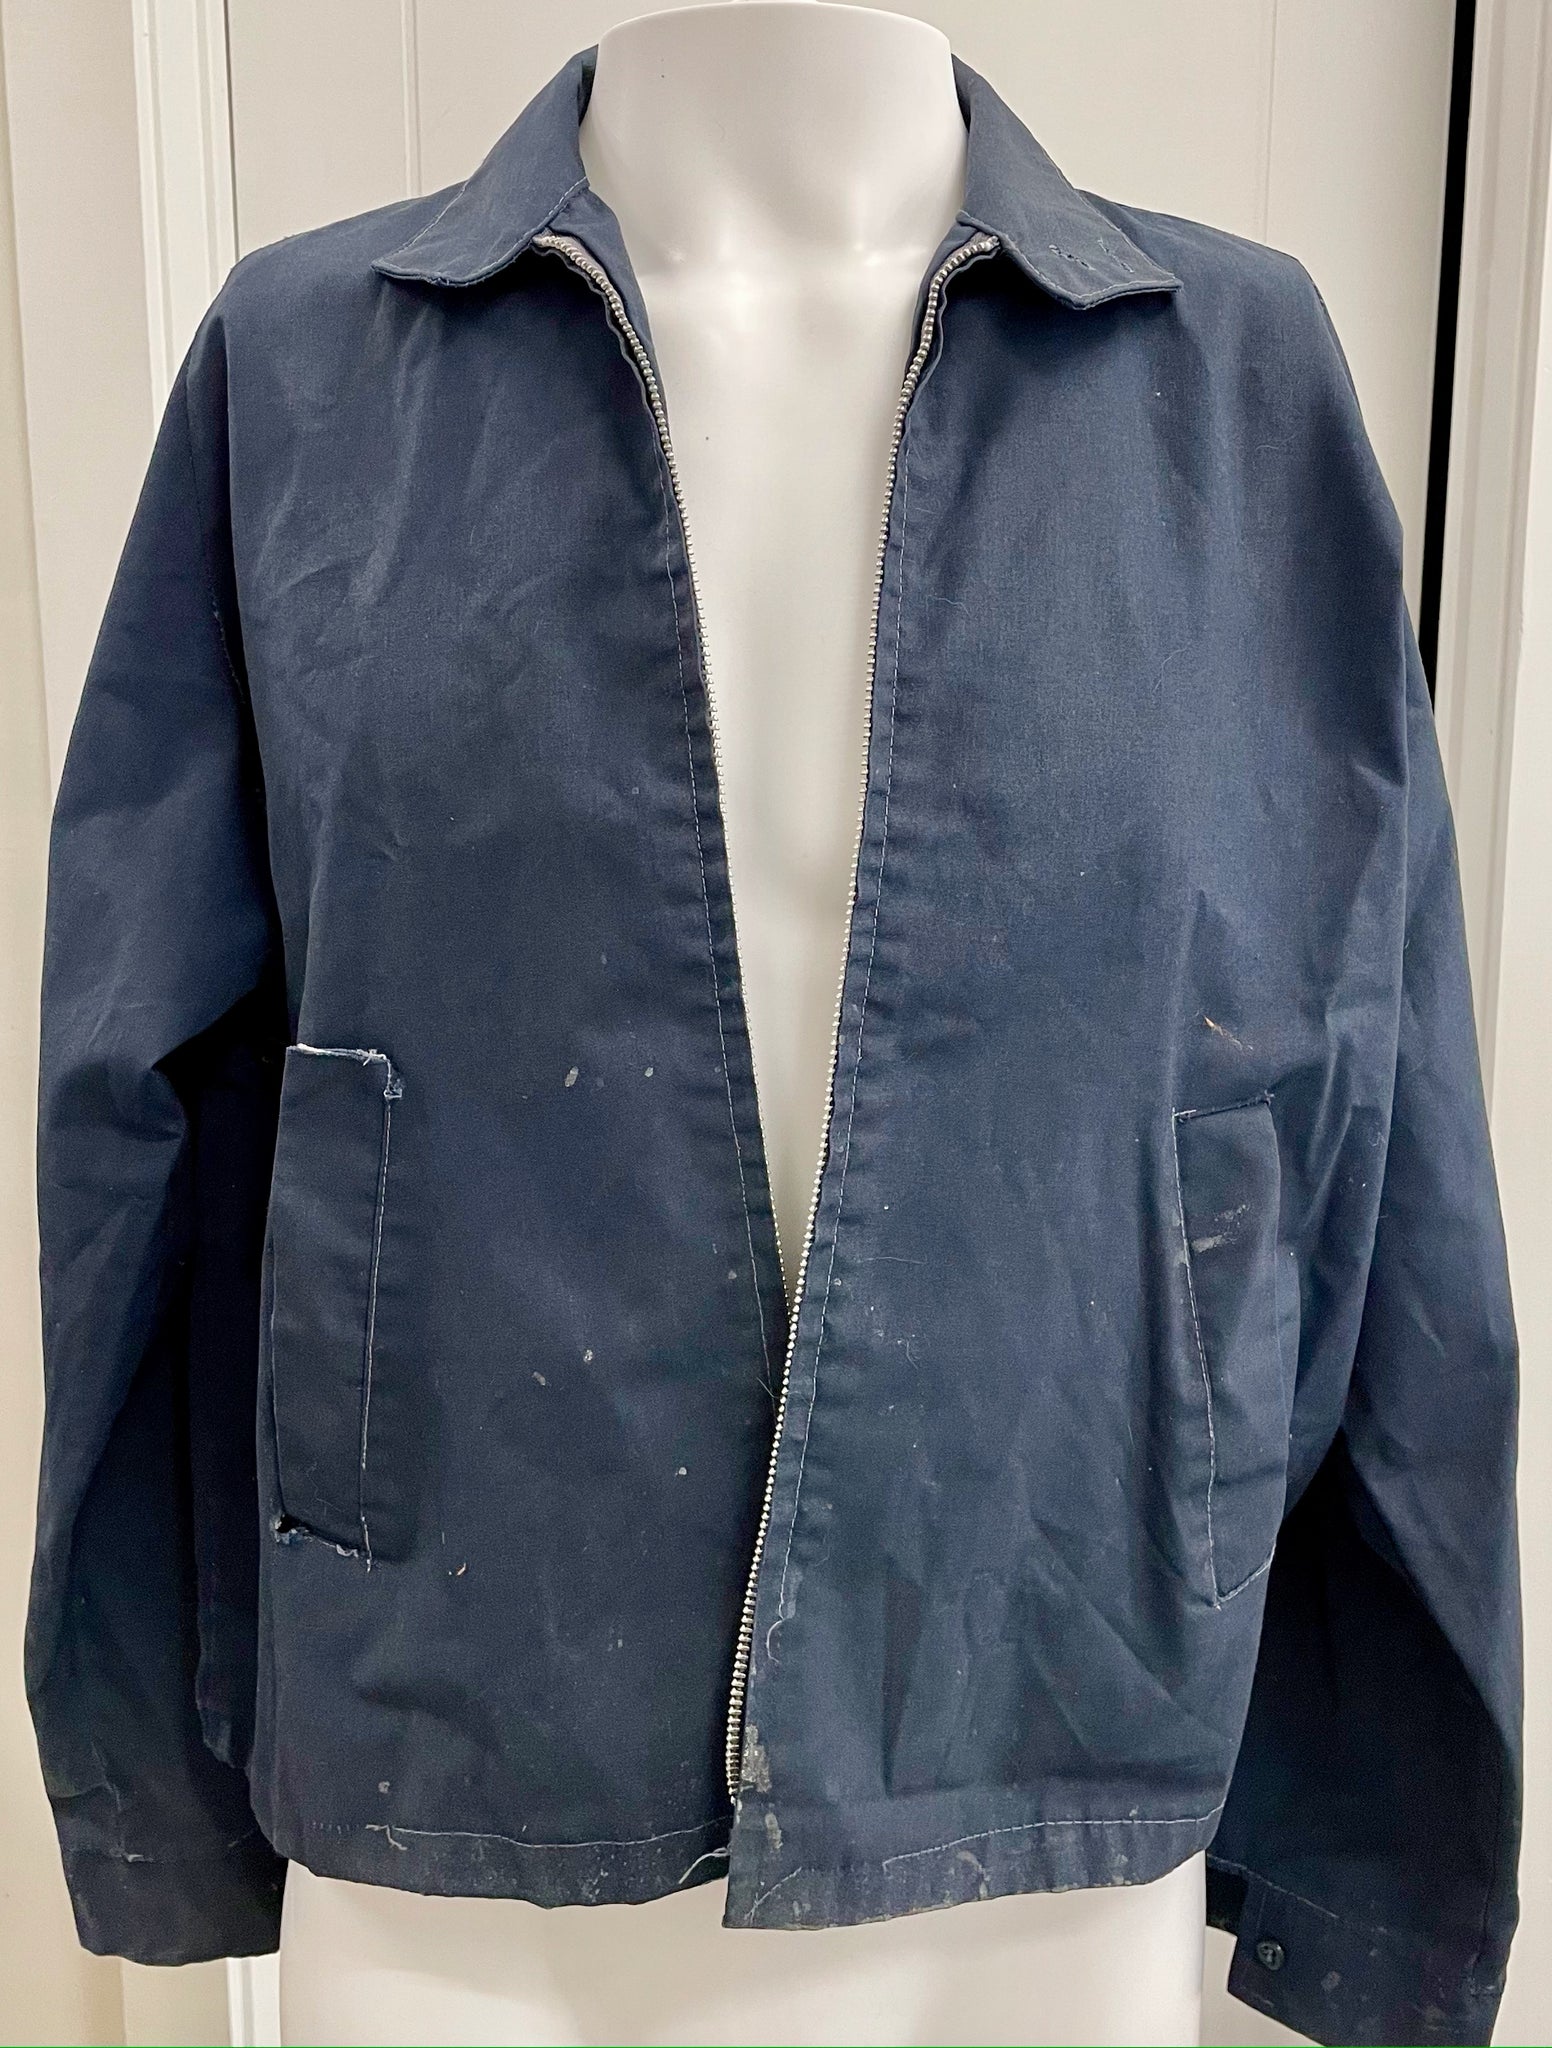 Baker, Chet. (1929 - 1988) Mr Navy Blue Zip Up Jacket by Mr. Leggs, ca. 1970s